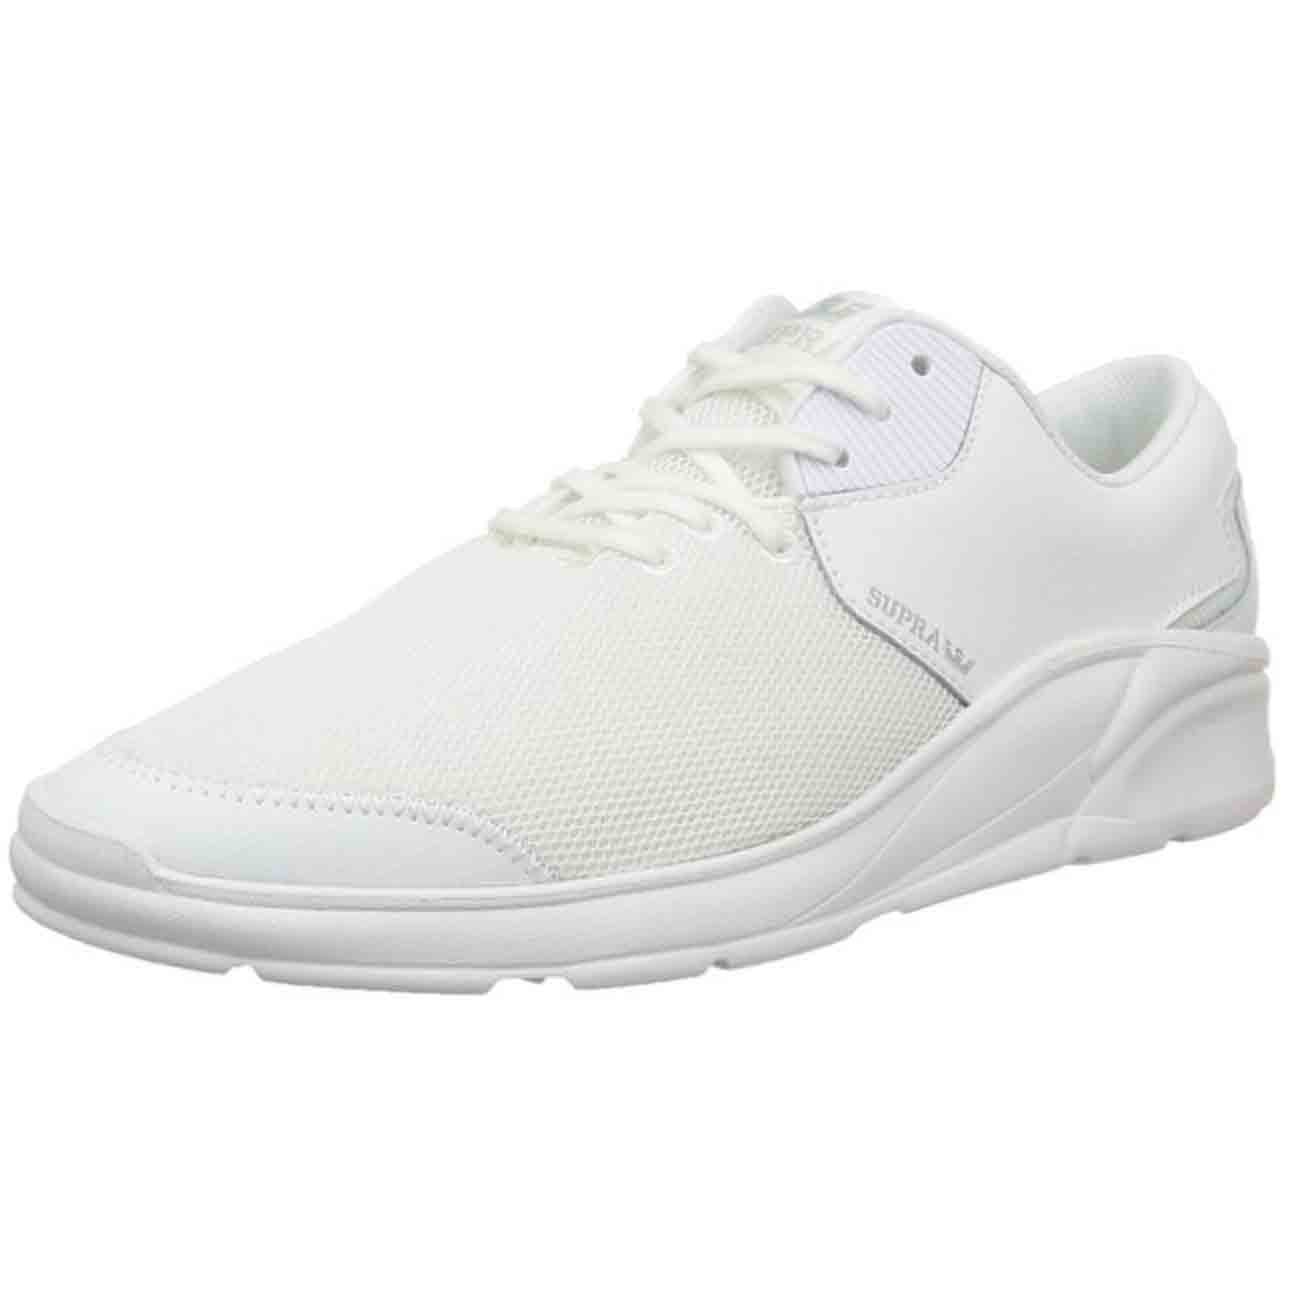 Ramen wassen strategie dubbellaag Supra Women's Noiz Low Mesh Fashion Sneaker Shoes White S56002 - Walmart.com